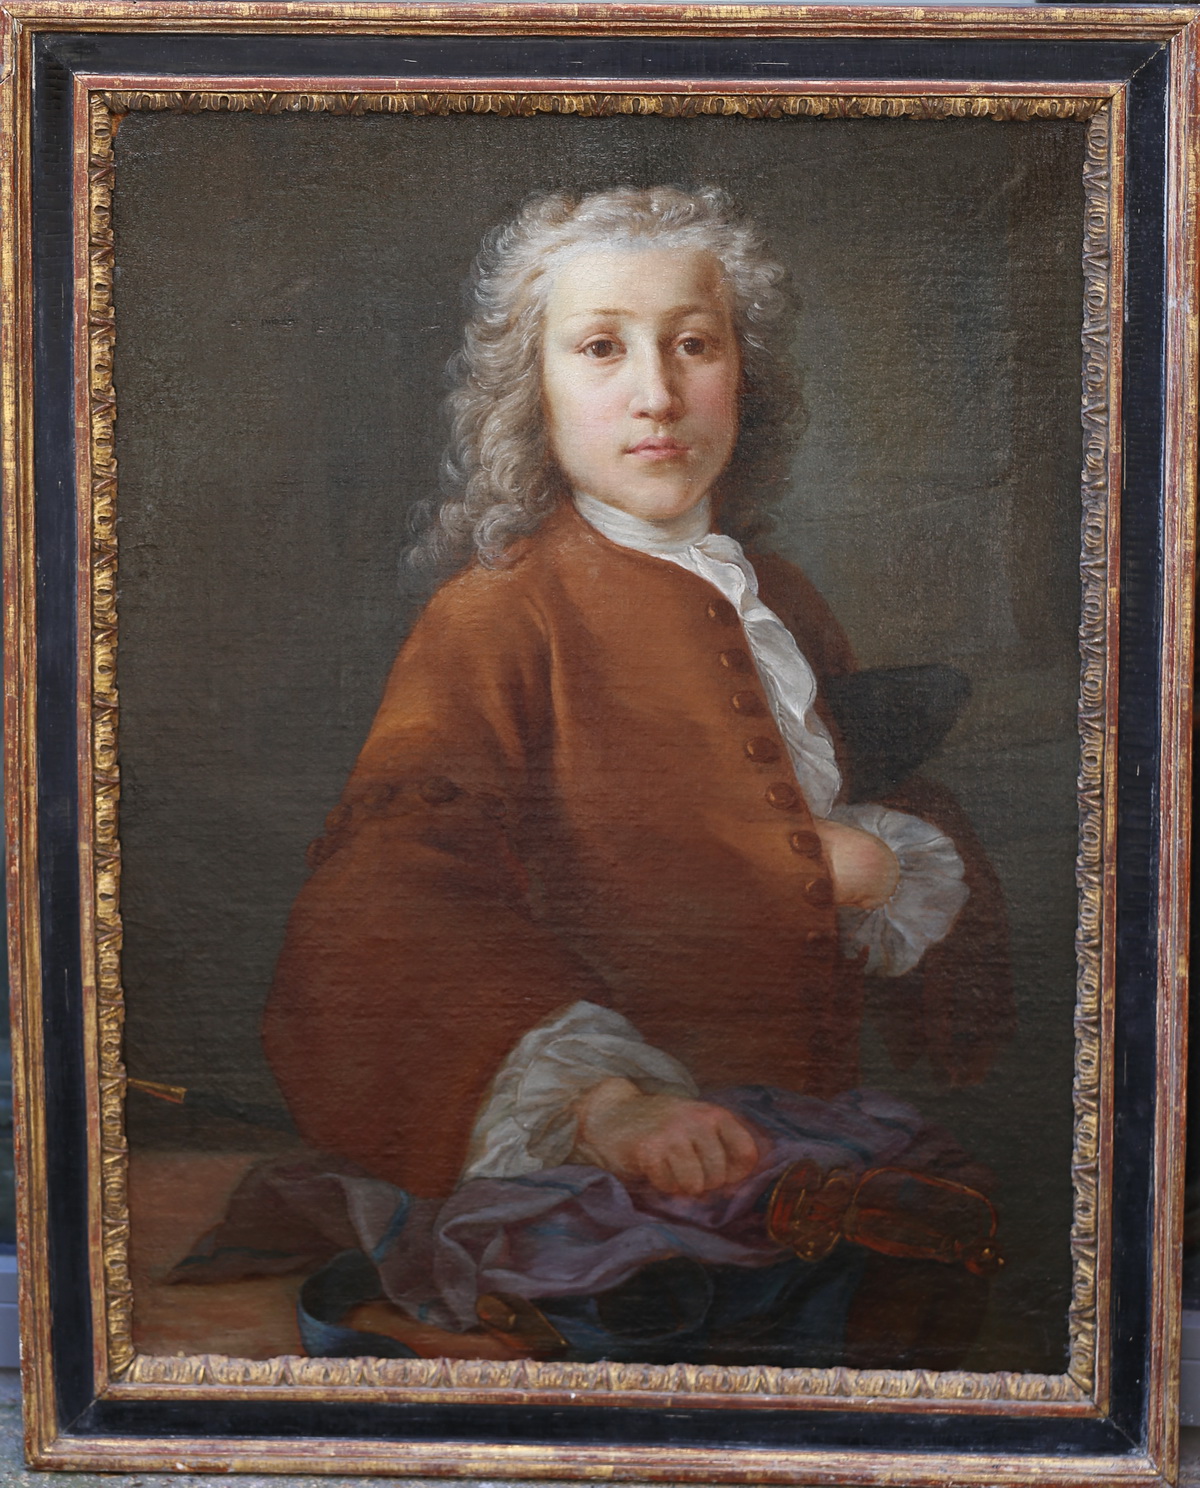 Alexis Simon BELLE 1674-1734 awarded